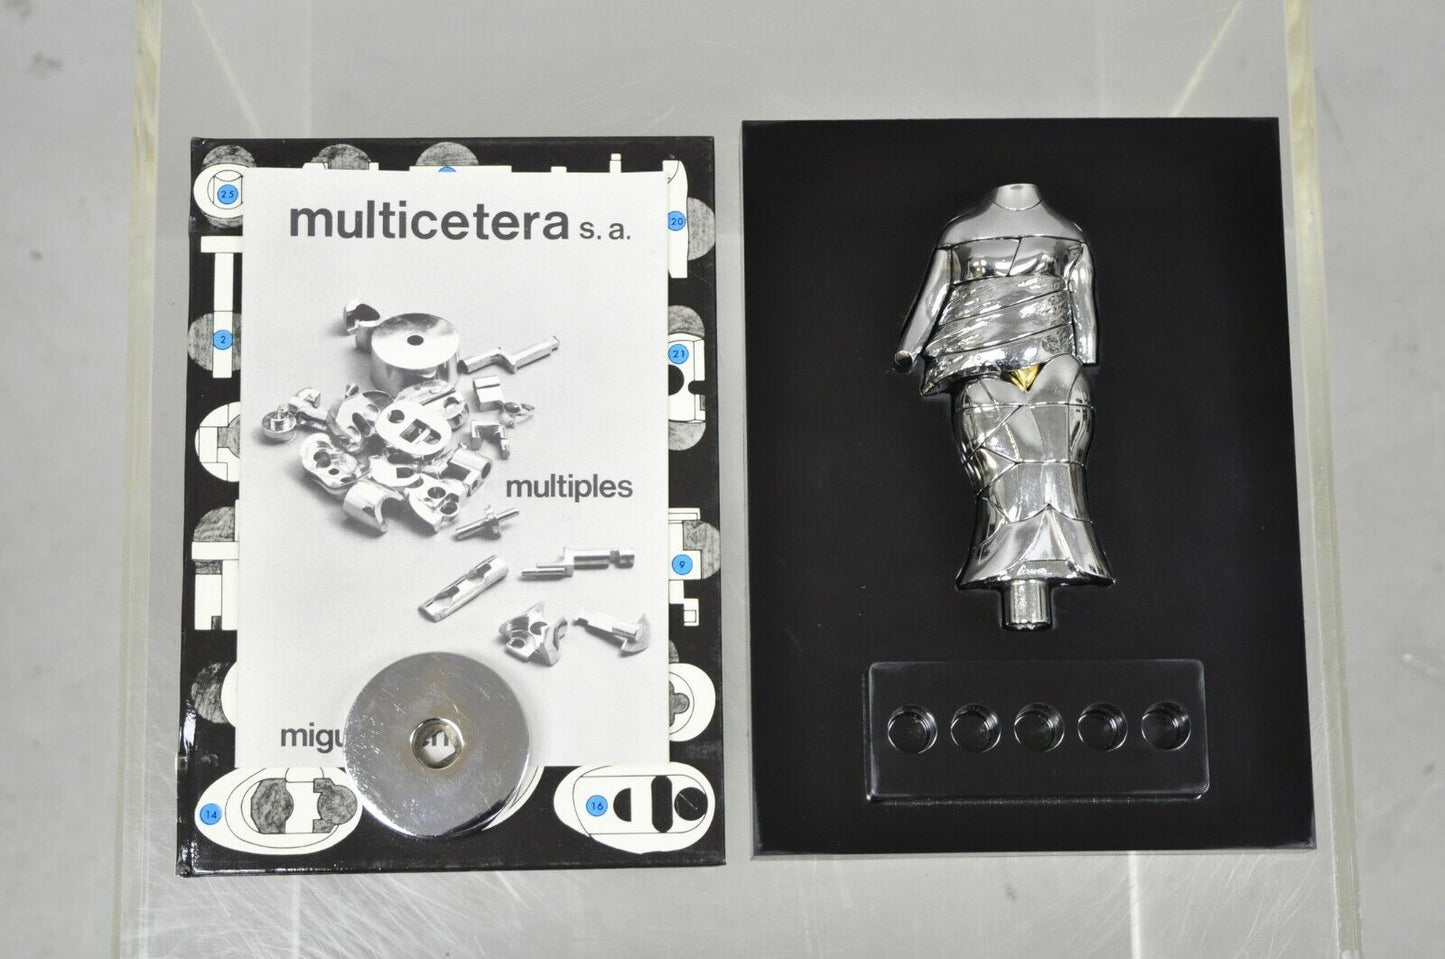 Miguel Berrocal La Mini Cariatide Nickel Plated Puzzle Sculpture Box and Book